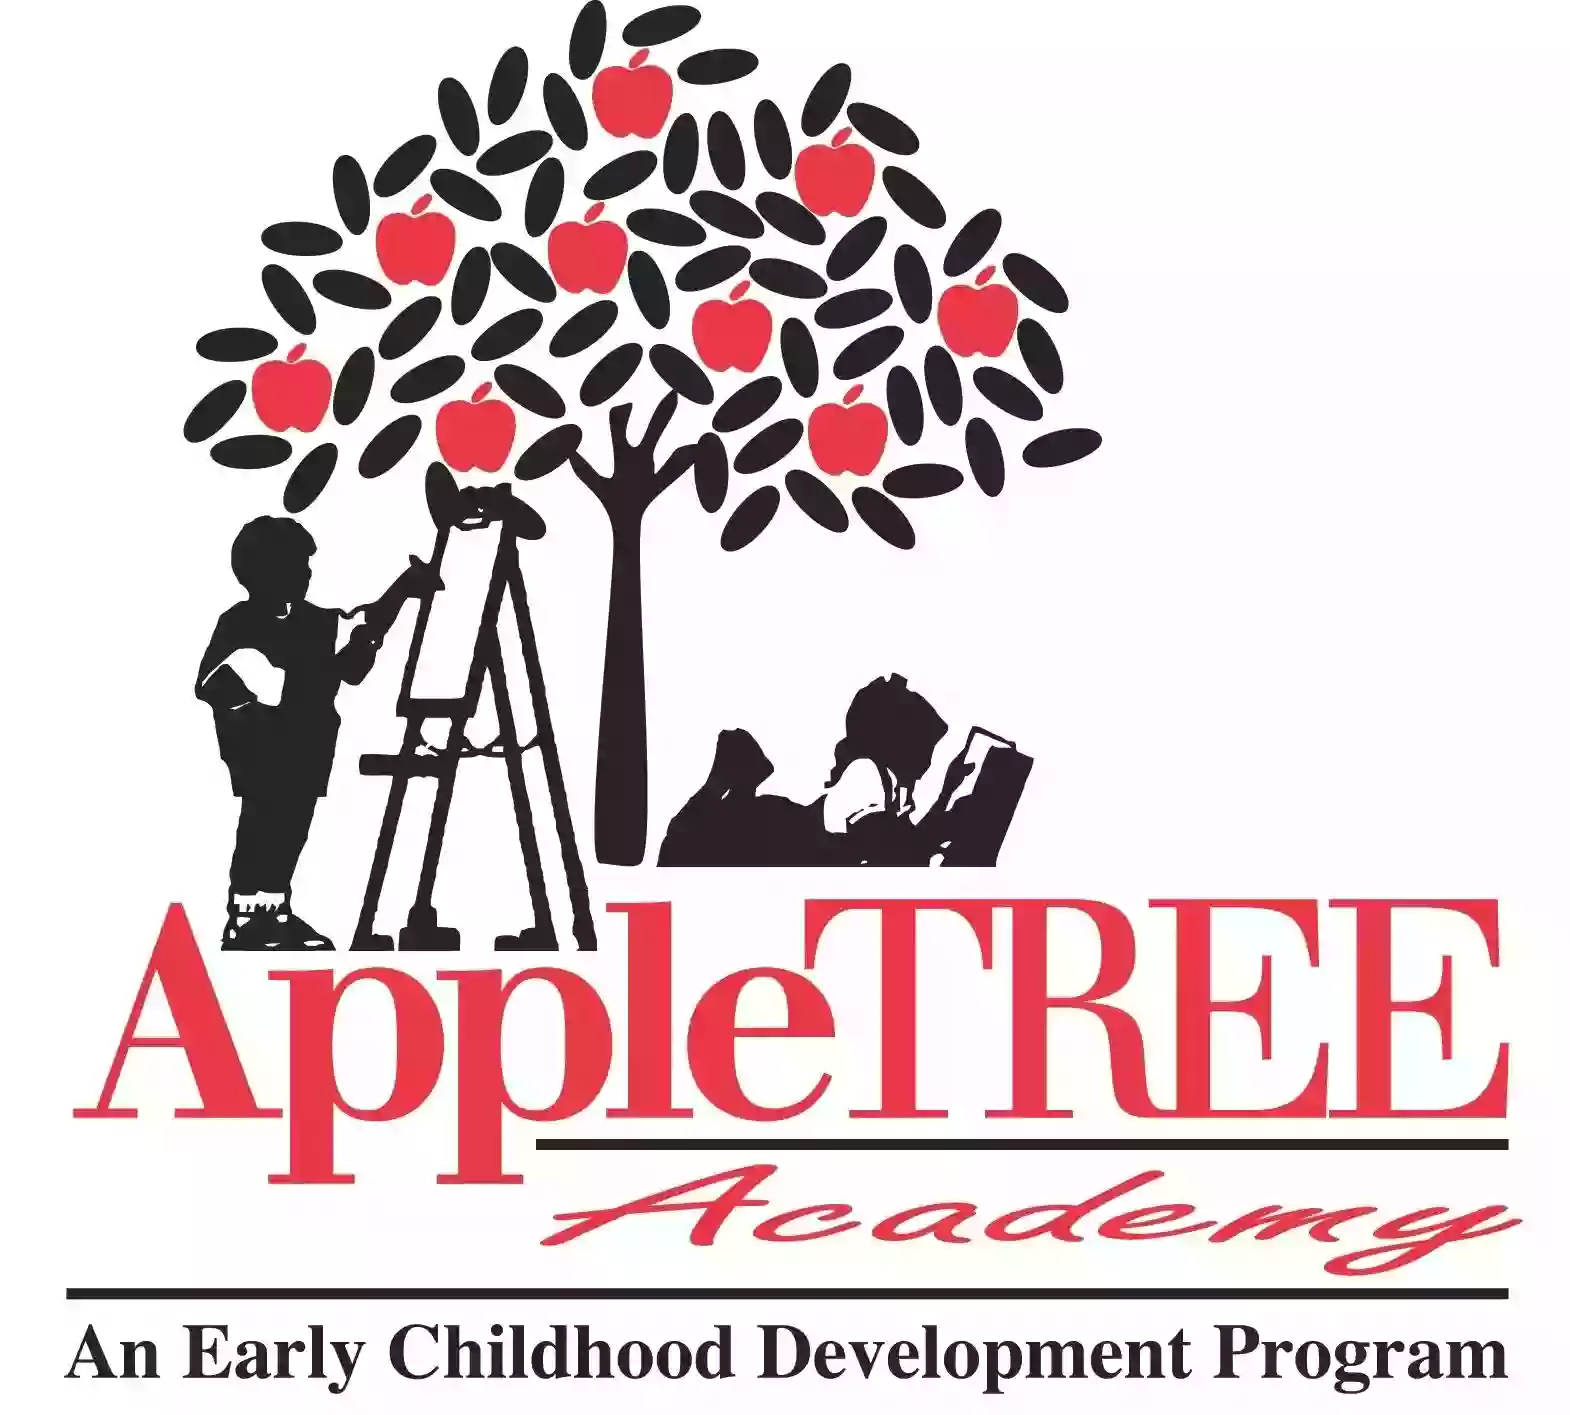 Appletree Academy